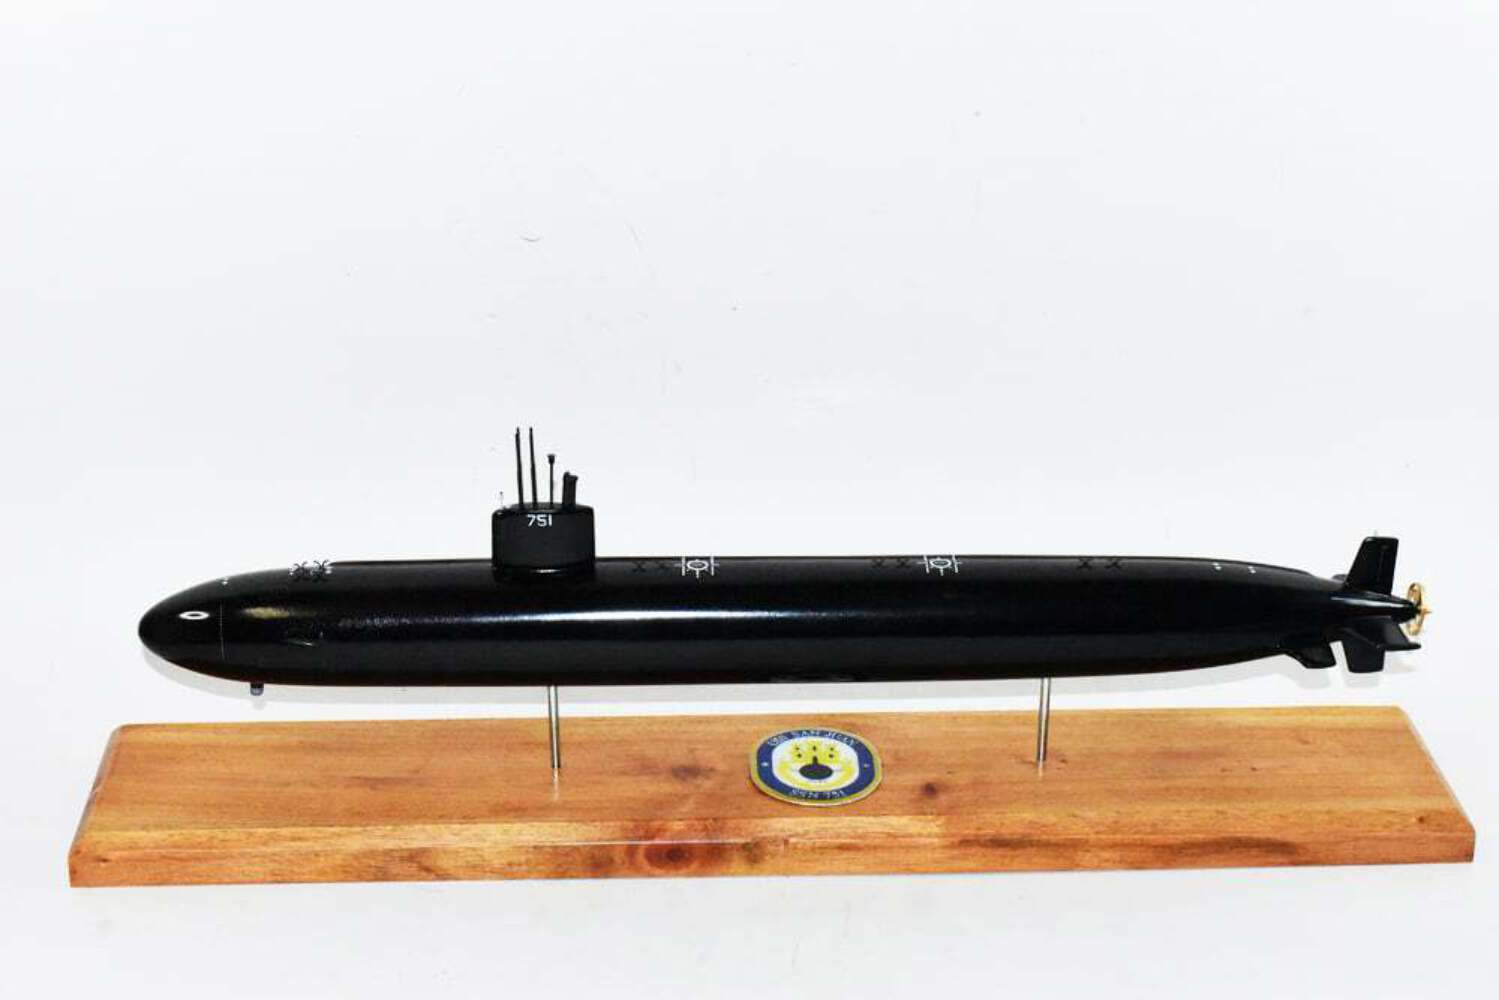 USS San Juan SSN-751 (Black Hull) Submarine Model,Navy,Scale Model,Mahogany,20